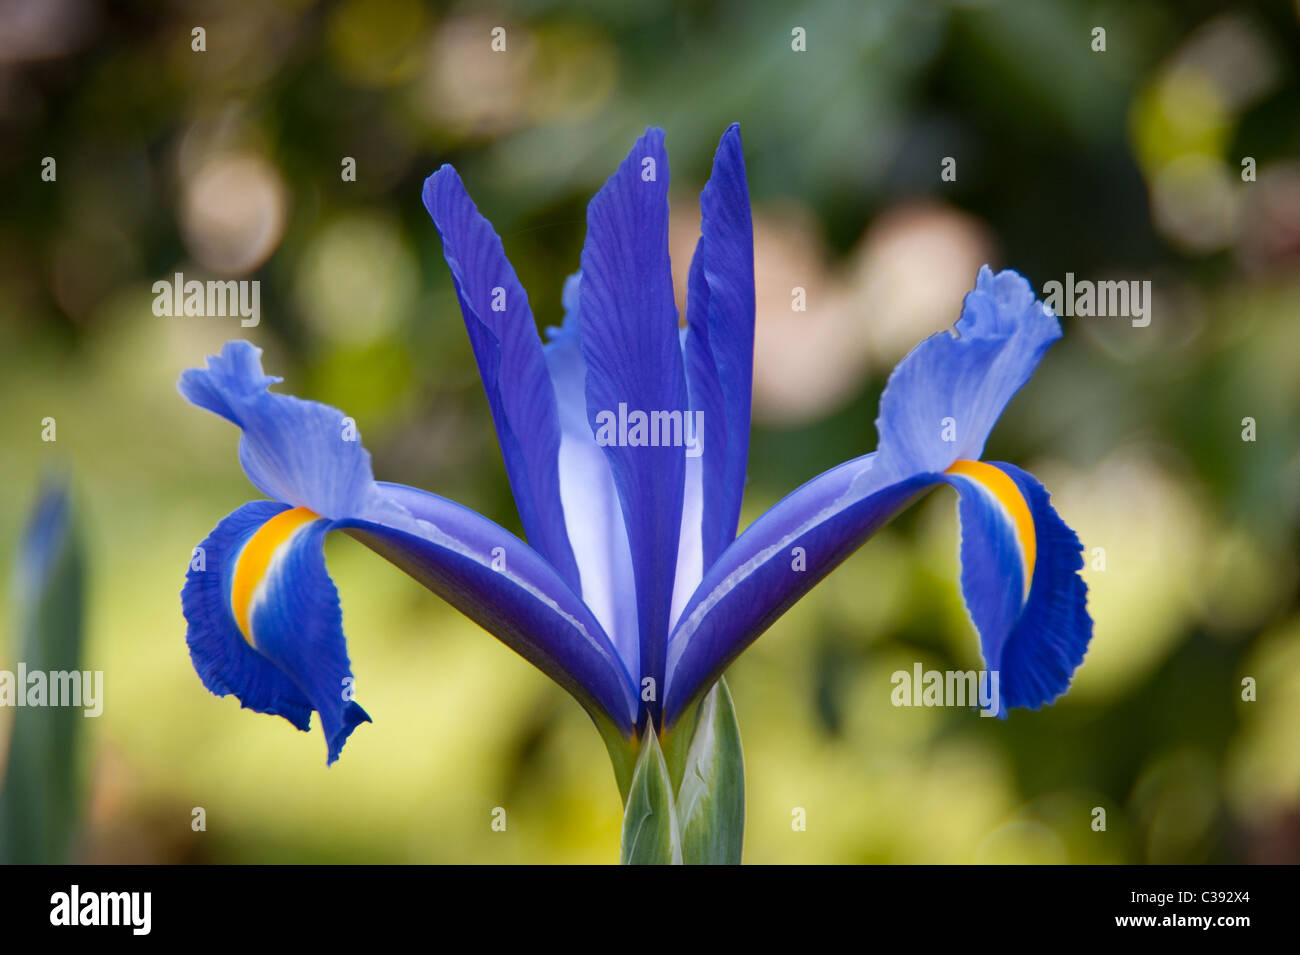 Blue iris flower in bloom during spring Stock Photo